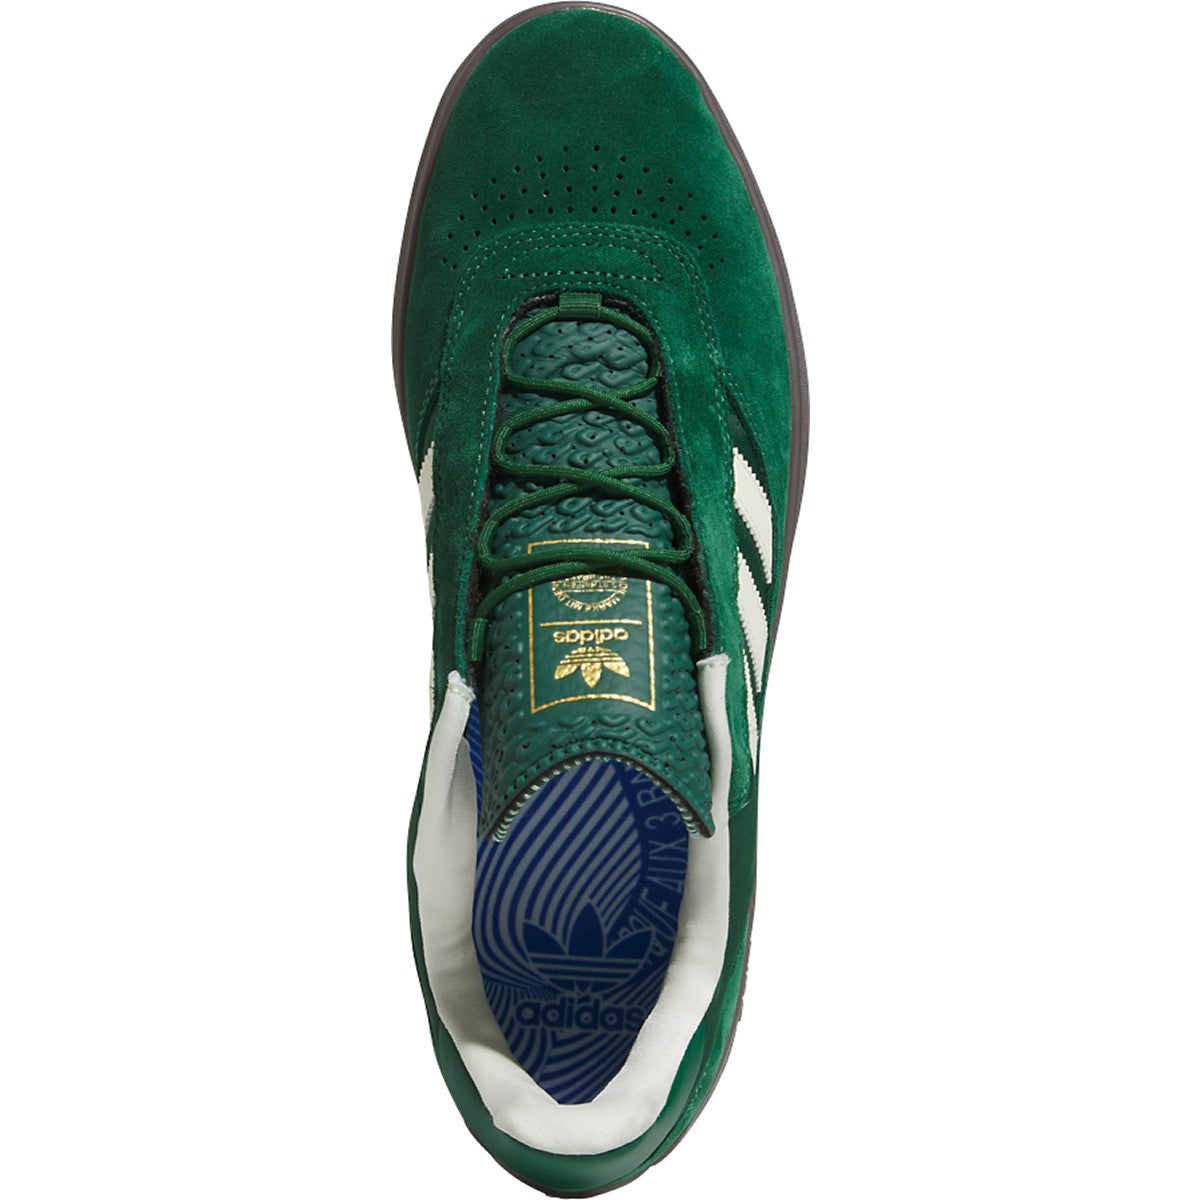 Dark Green/Gum Puig Adidas Skate Shoe Top